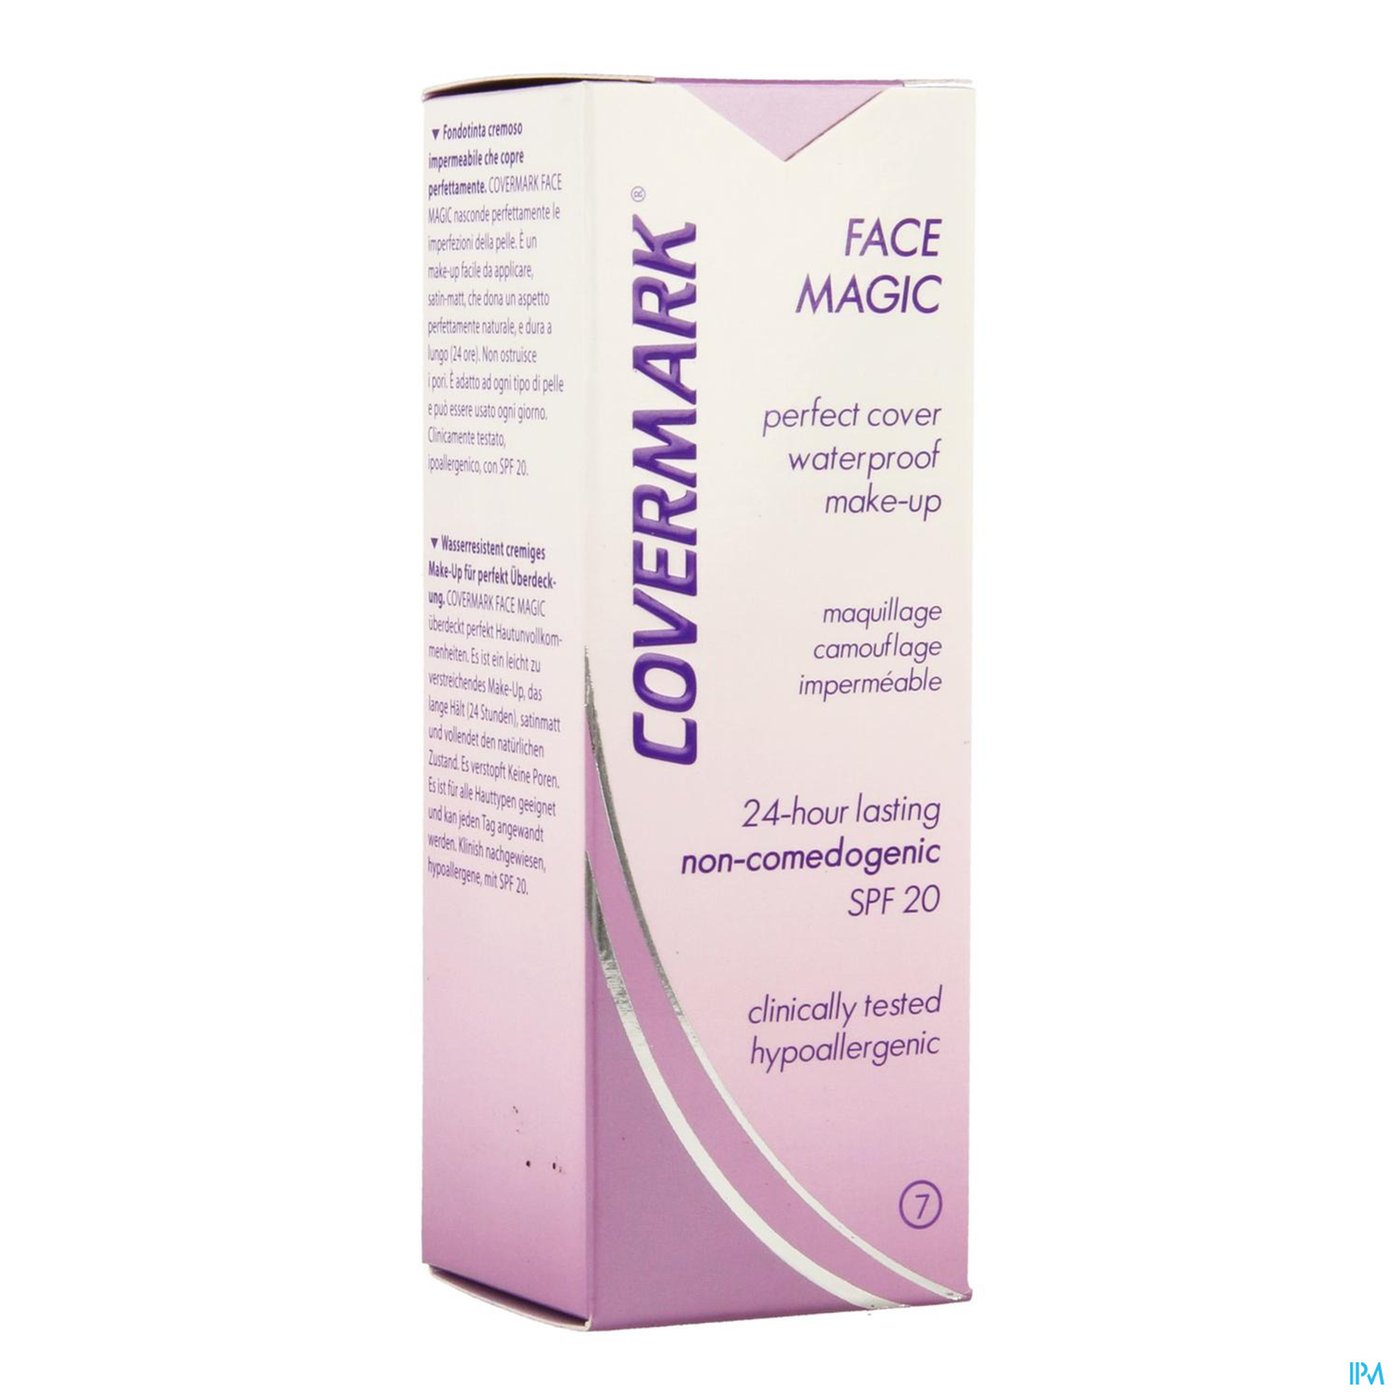 Covermark Face Magic N7 Roestbruin 30ml packshot